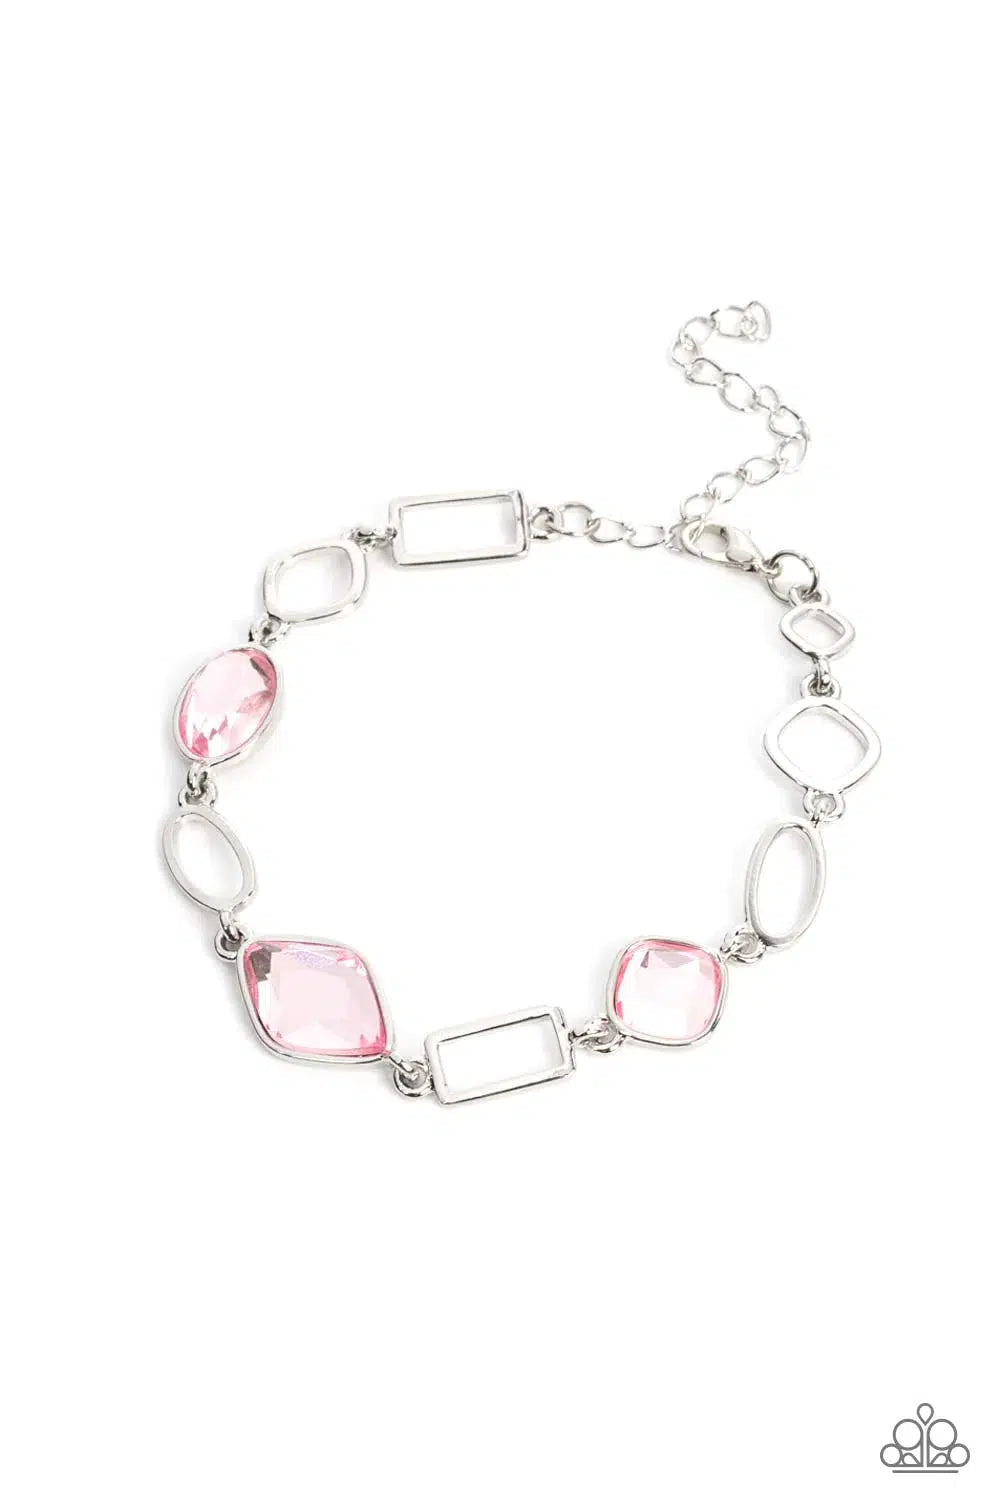 Dazzle For Days Pink Bracelet - Paparazzi Accessories- lightbox - CarasShop.com - $5 Jewelry by Cara Jewels